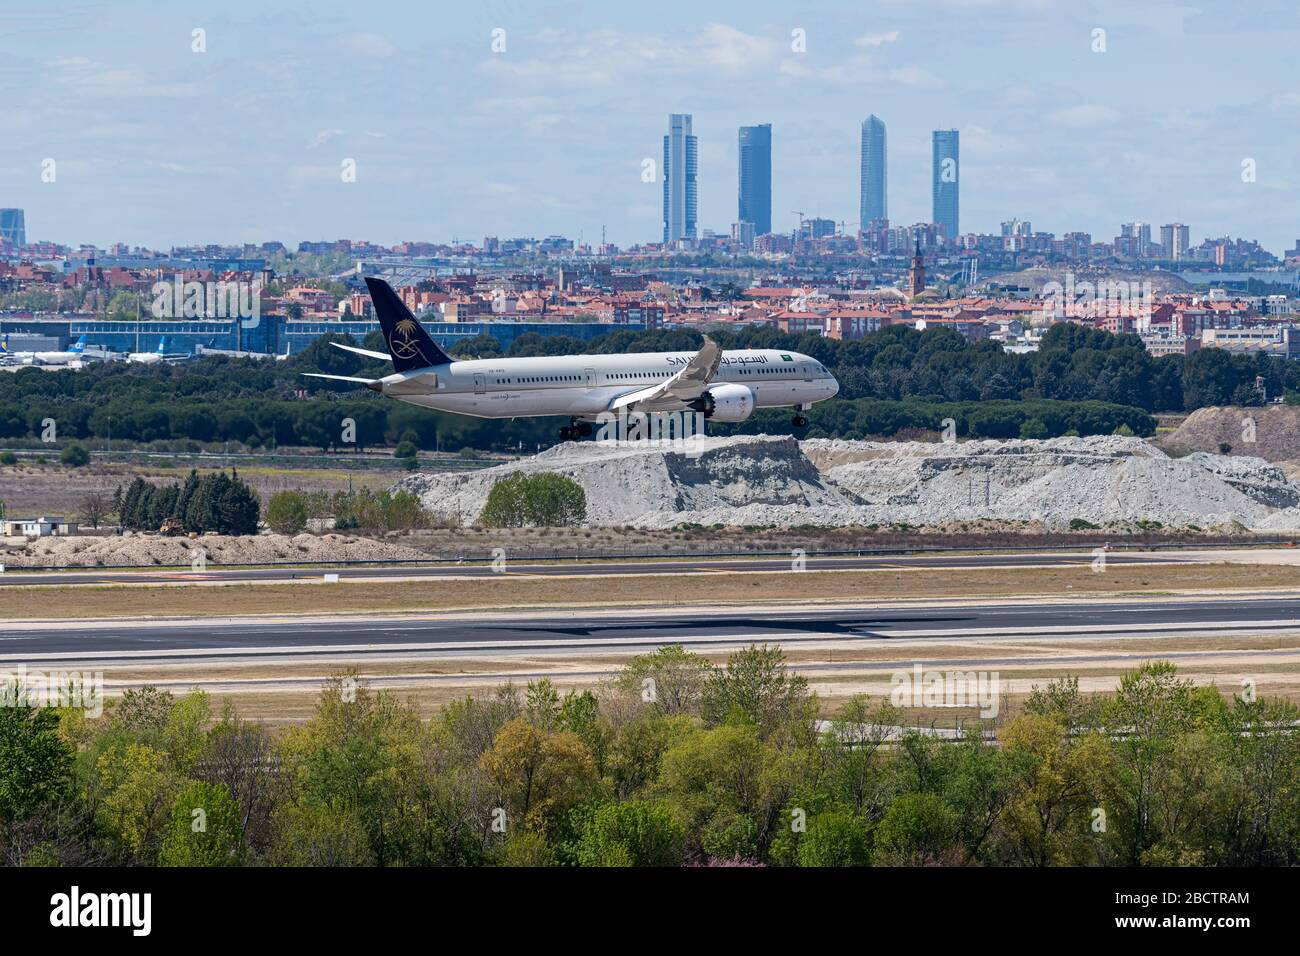 MADRID, SPAIN - APRIL 14, 2019: Saudi Arabian Airlines Boeing 787 passenger plane landing at Madrid-Barajas International Airport Adolfo Suarez In the Stock Photo